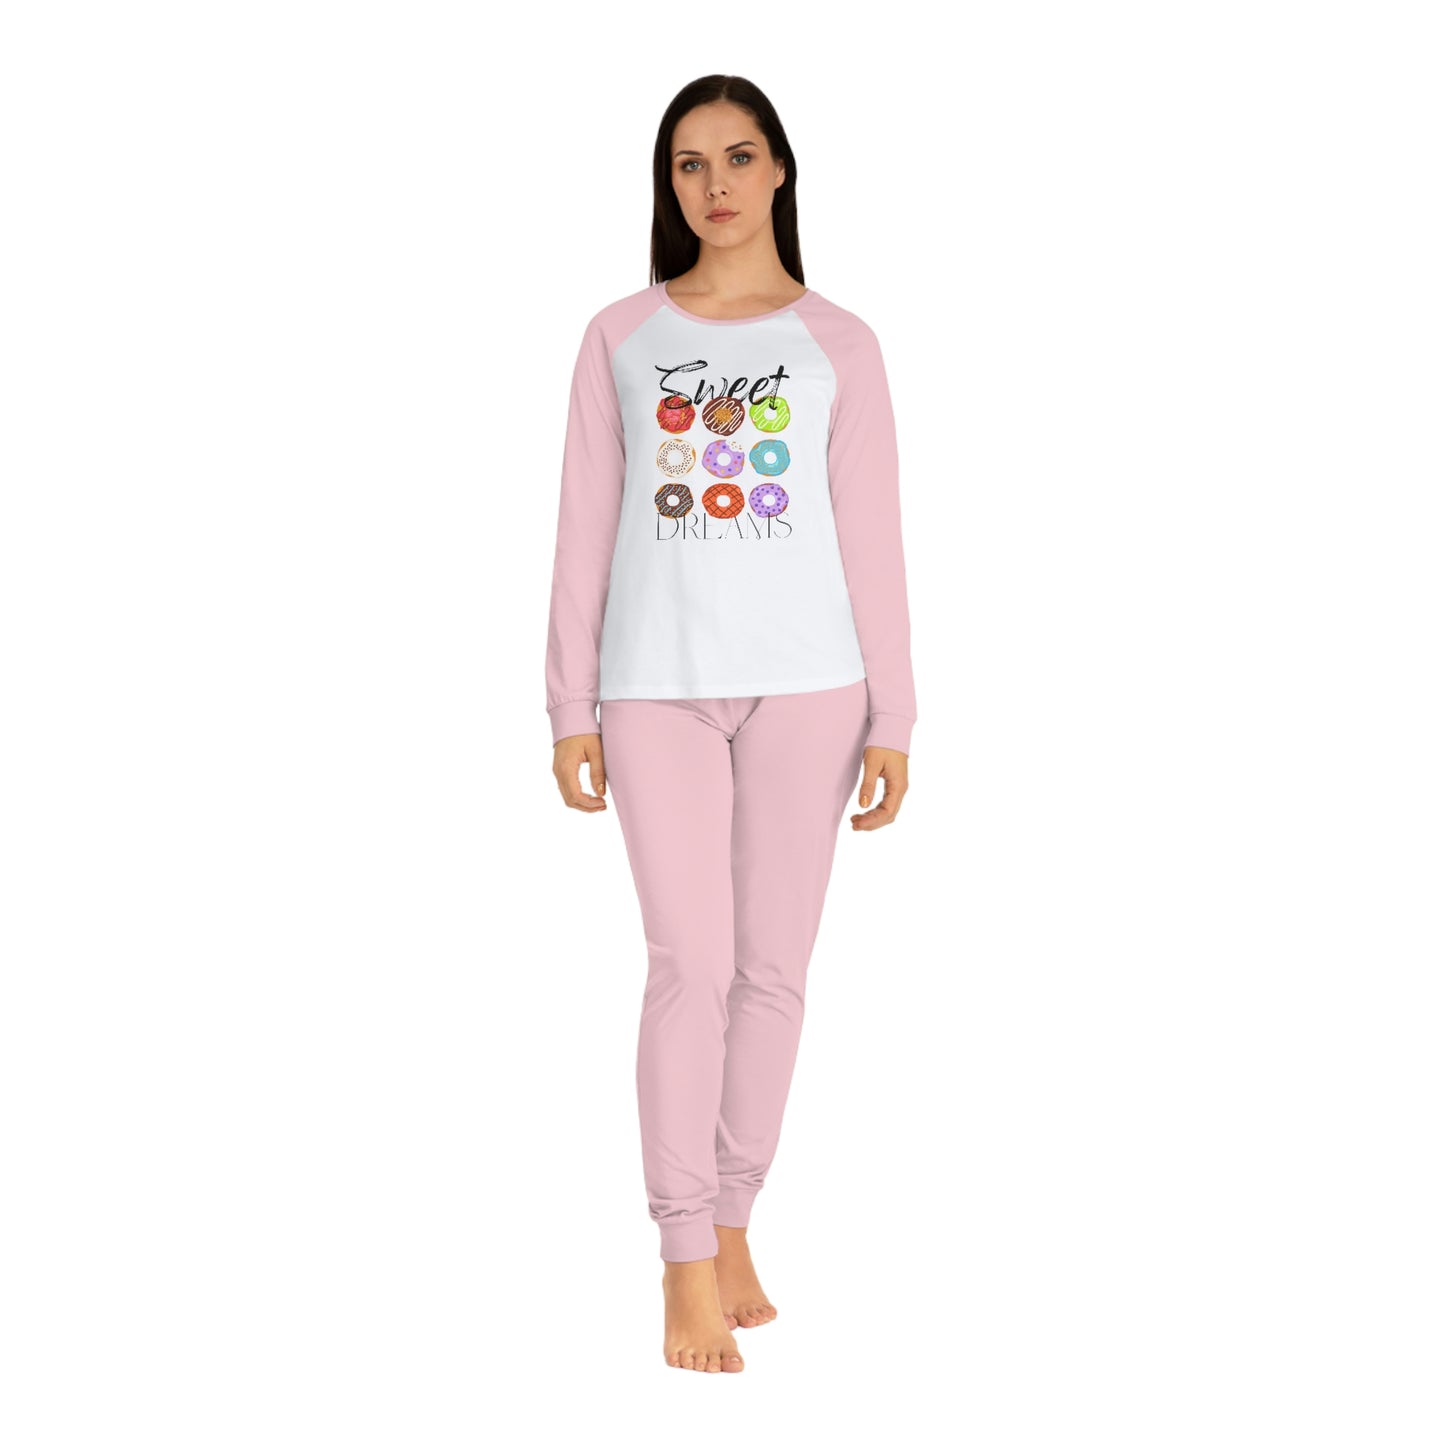 Sweet Dreams Women's Pajama Set (Pink or Gray)